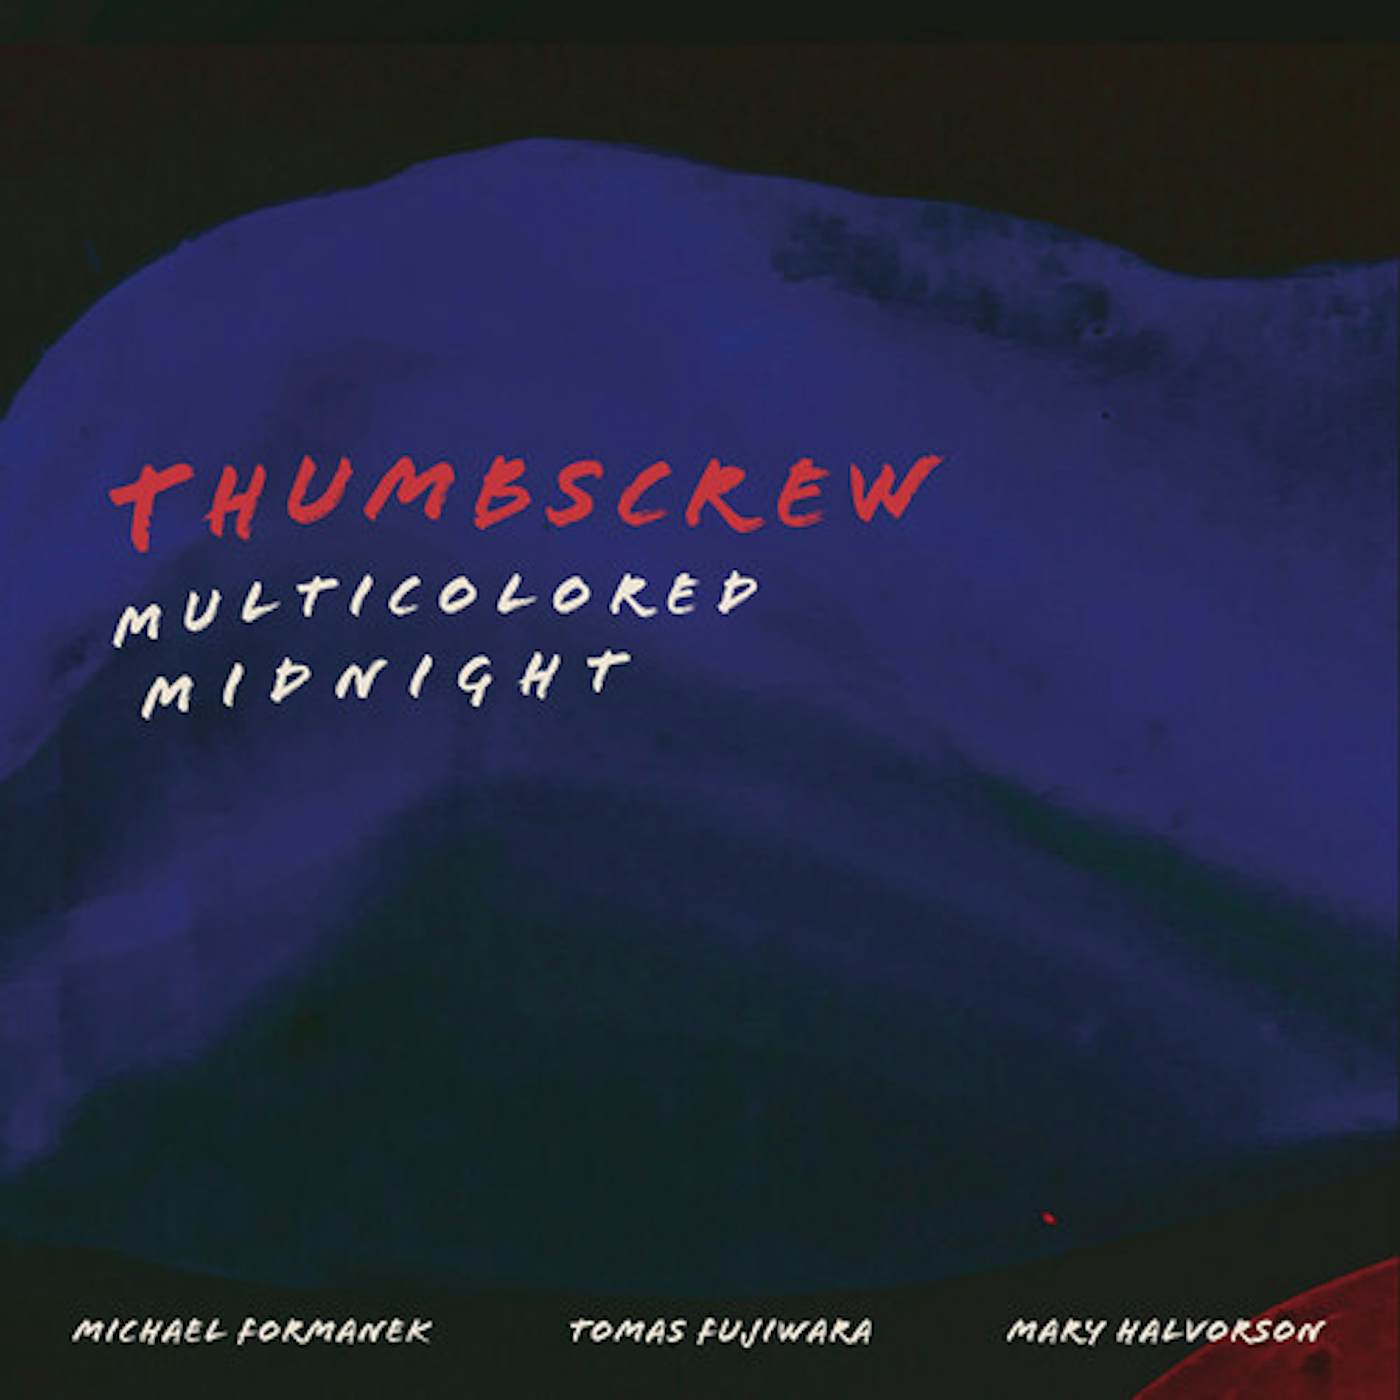 Thumbscrew MULTICOLORED MIDNIGHT Vinyl Record